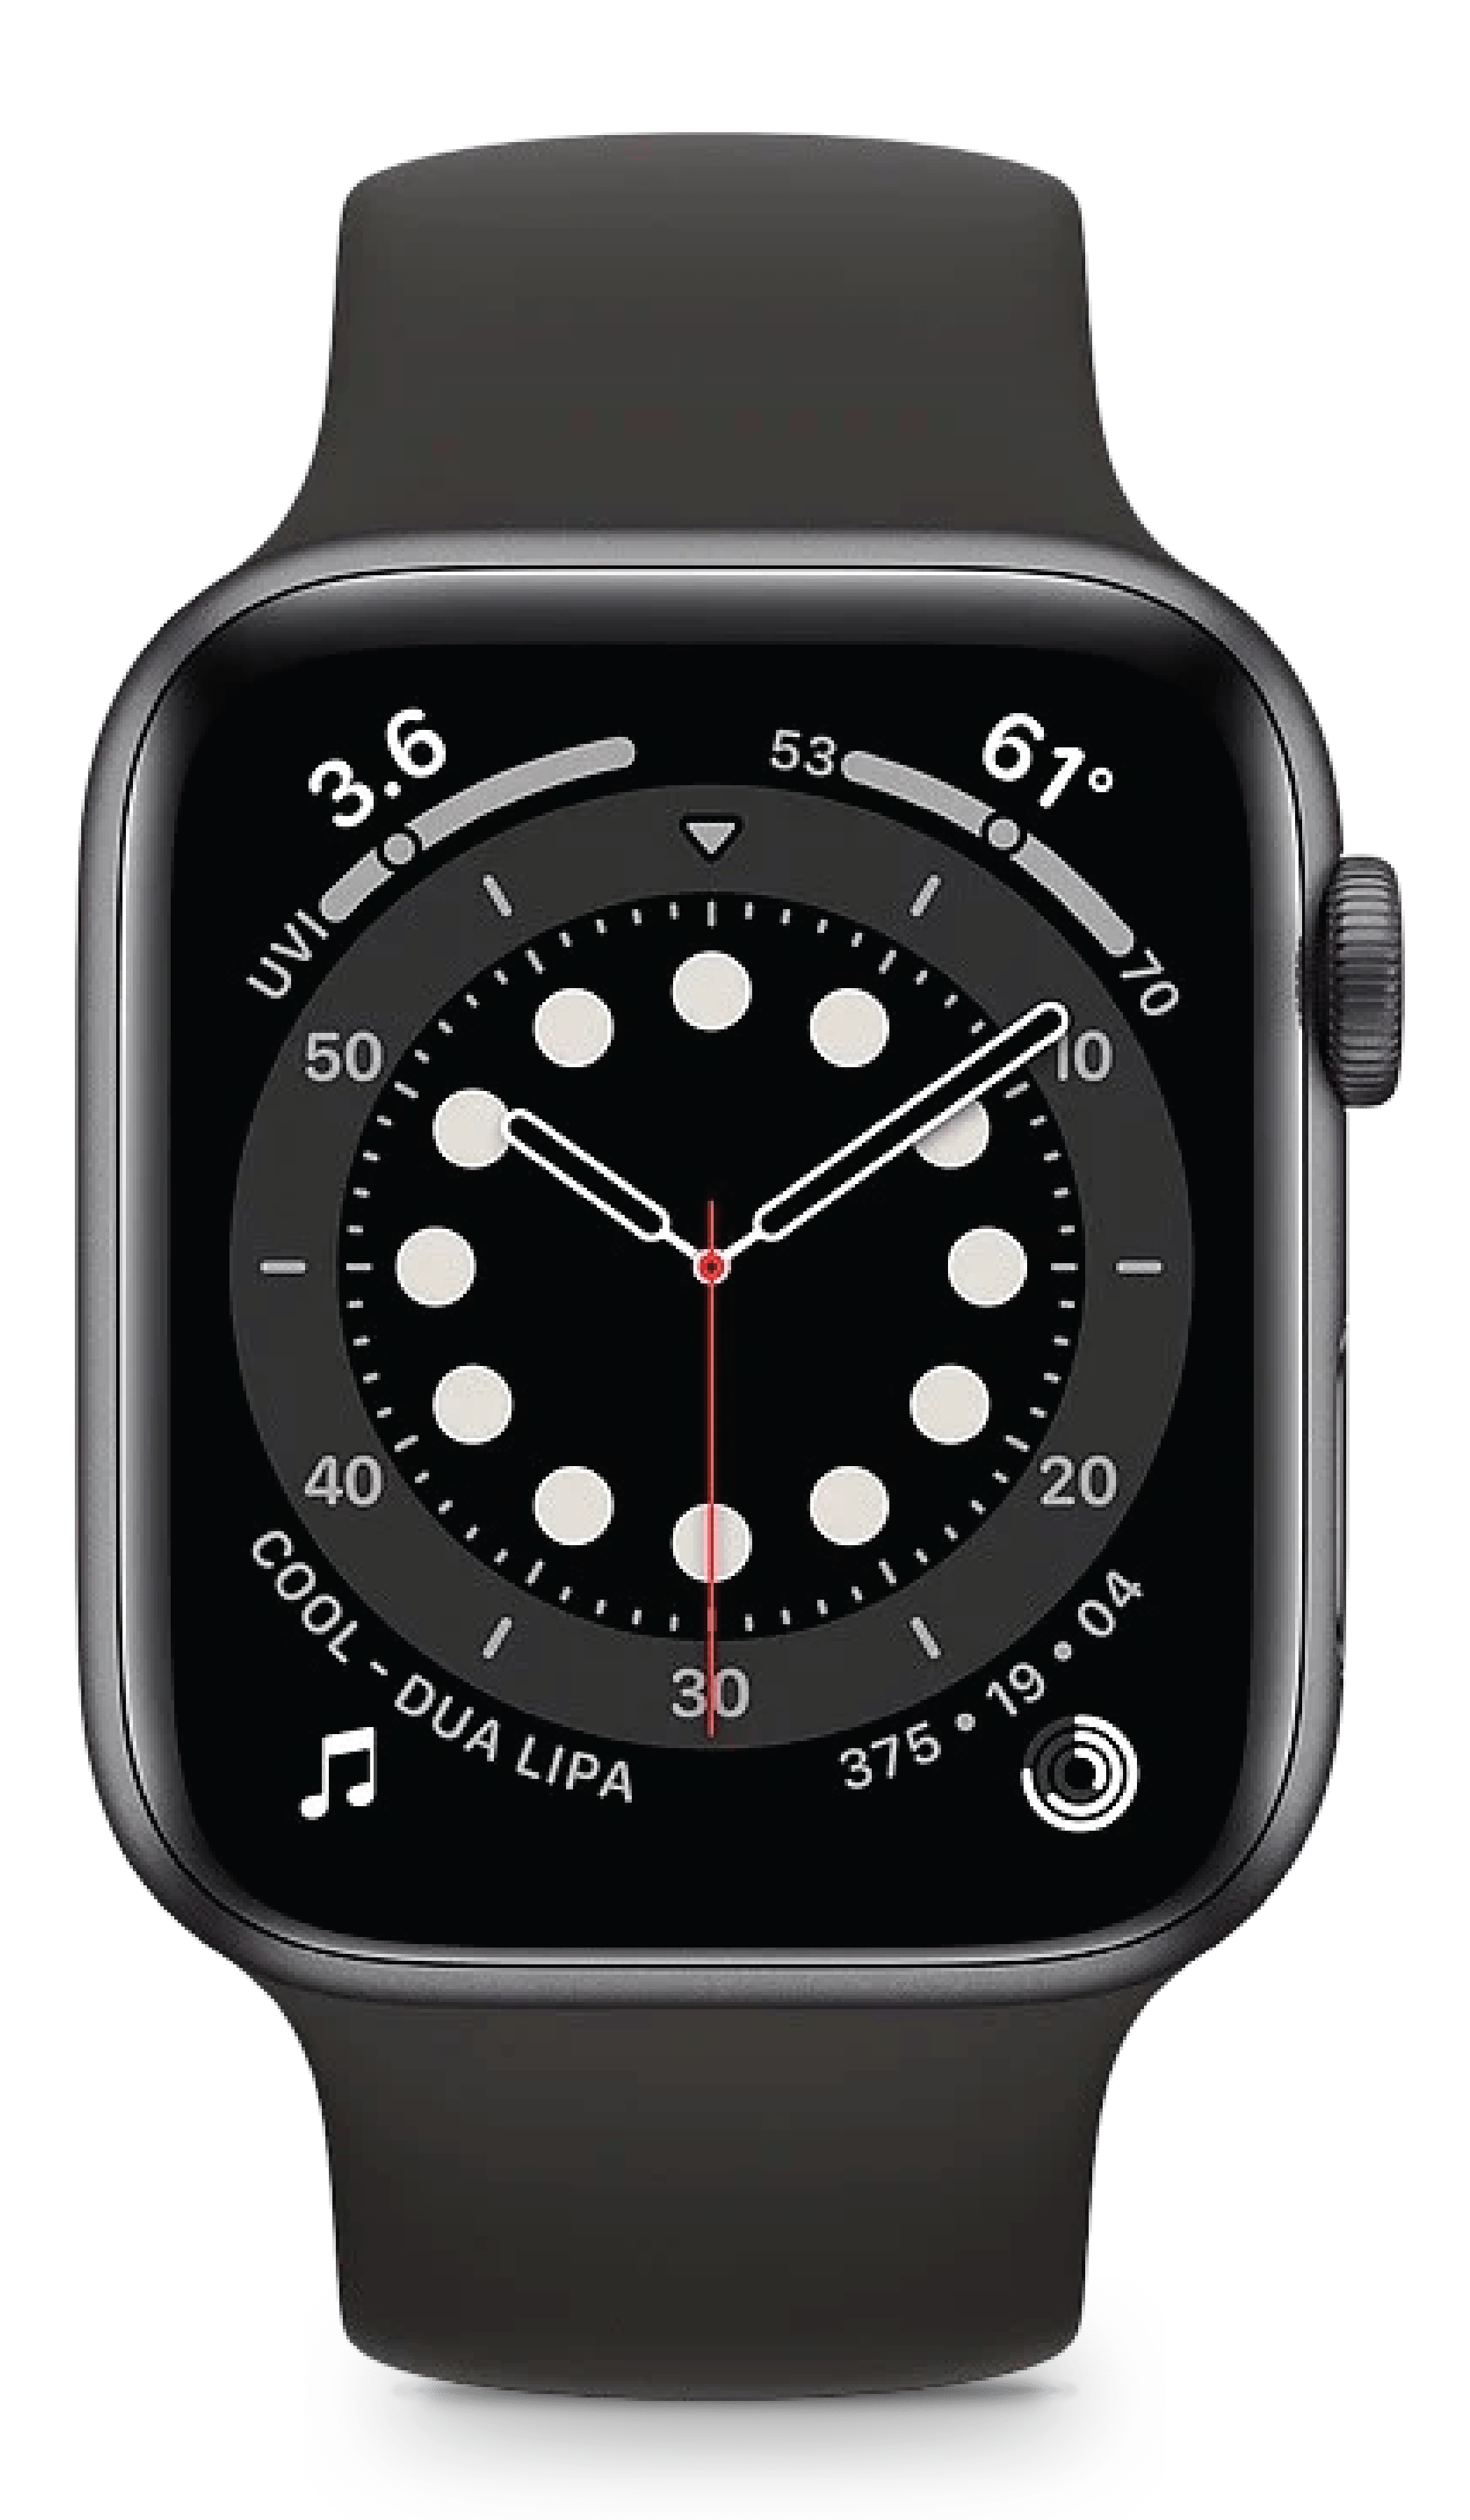 Buy an Apple Watch Series 6 16GB Space Black | Phonetradr